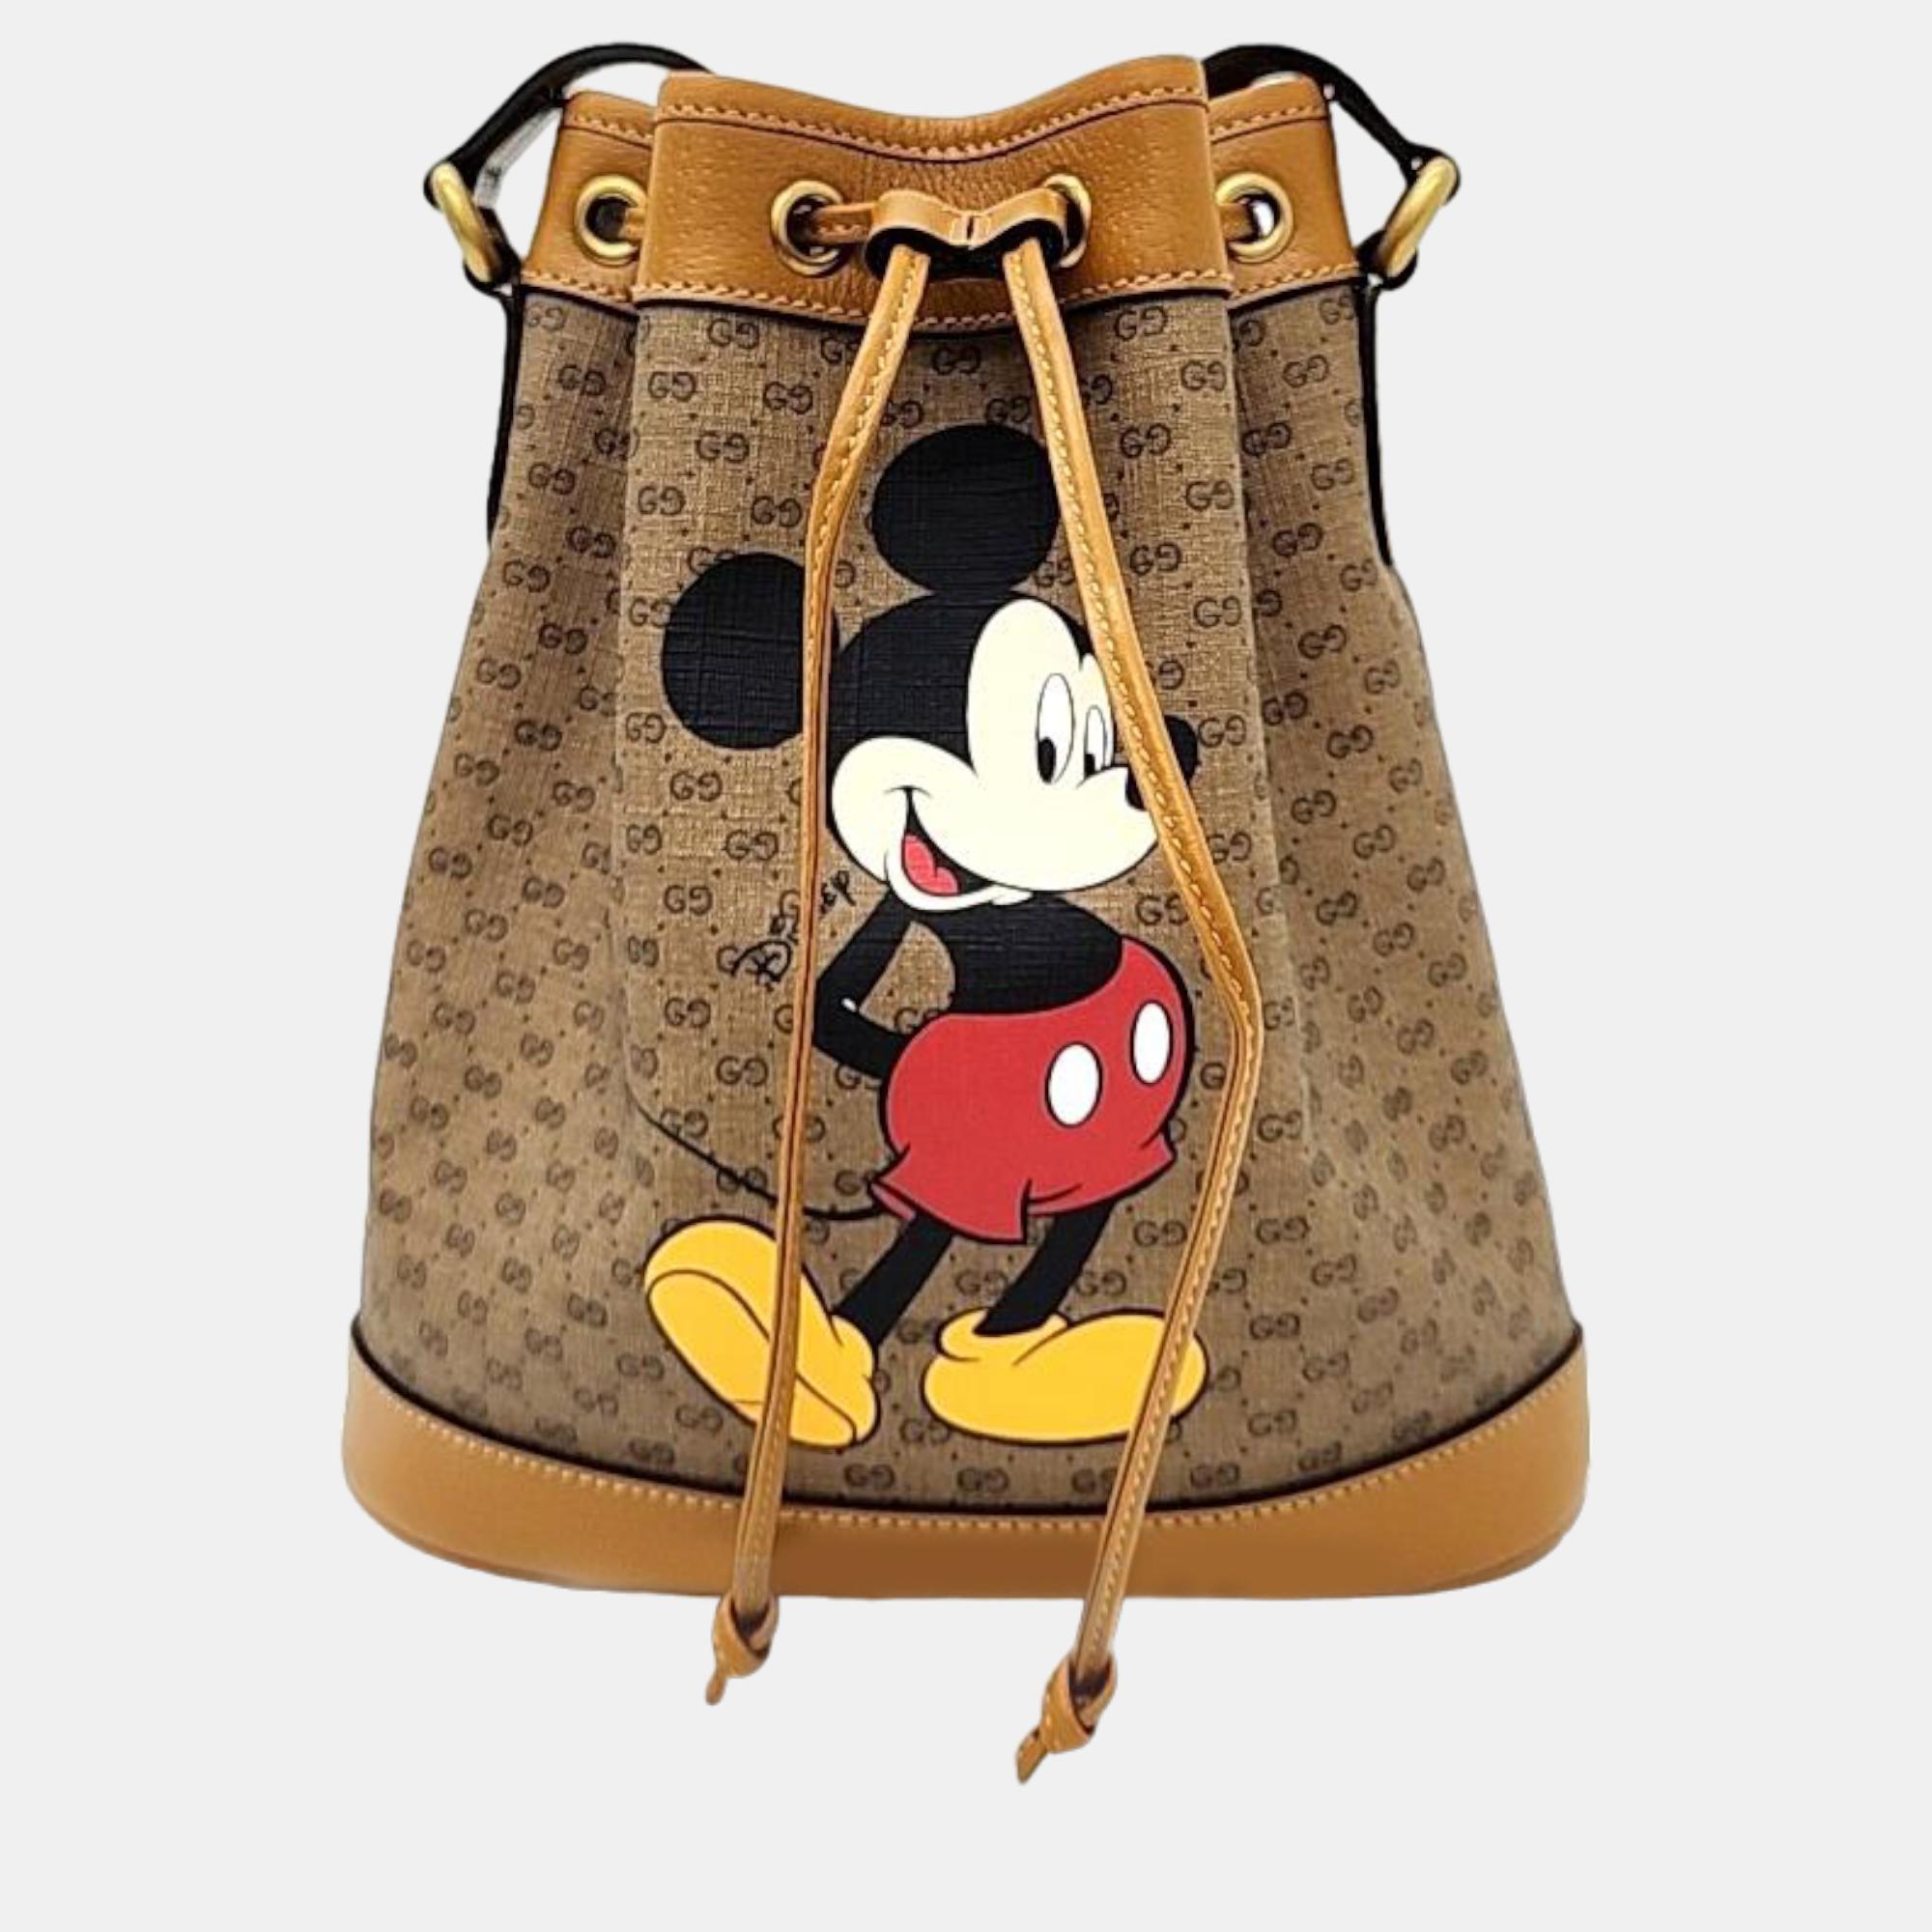 Gucci X Disney Printed Bucket Bag